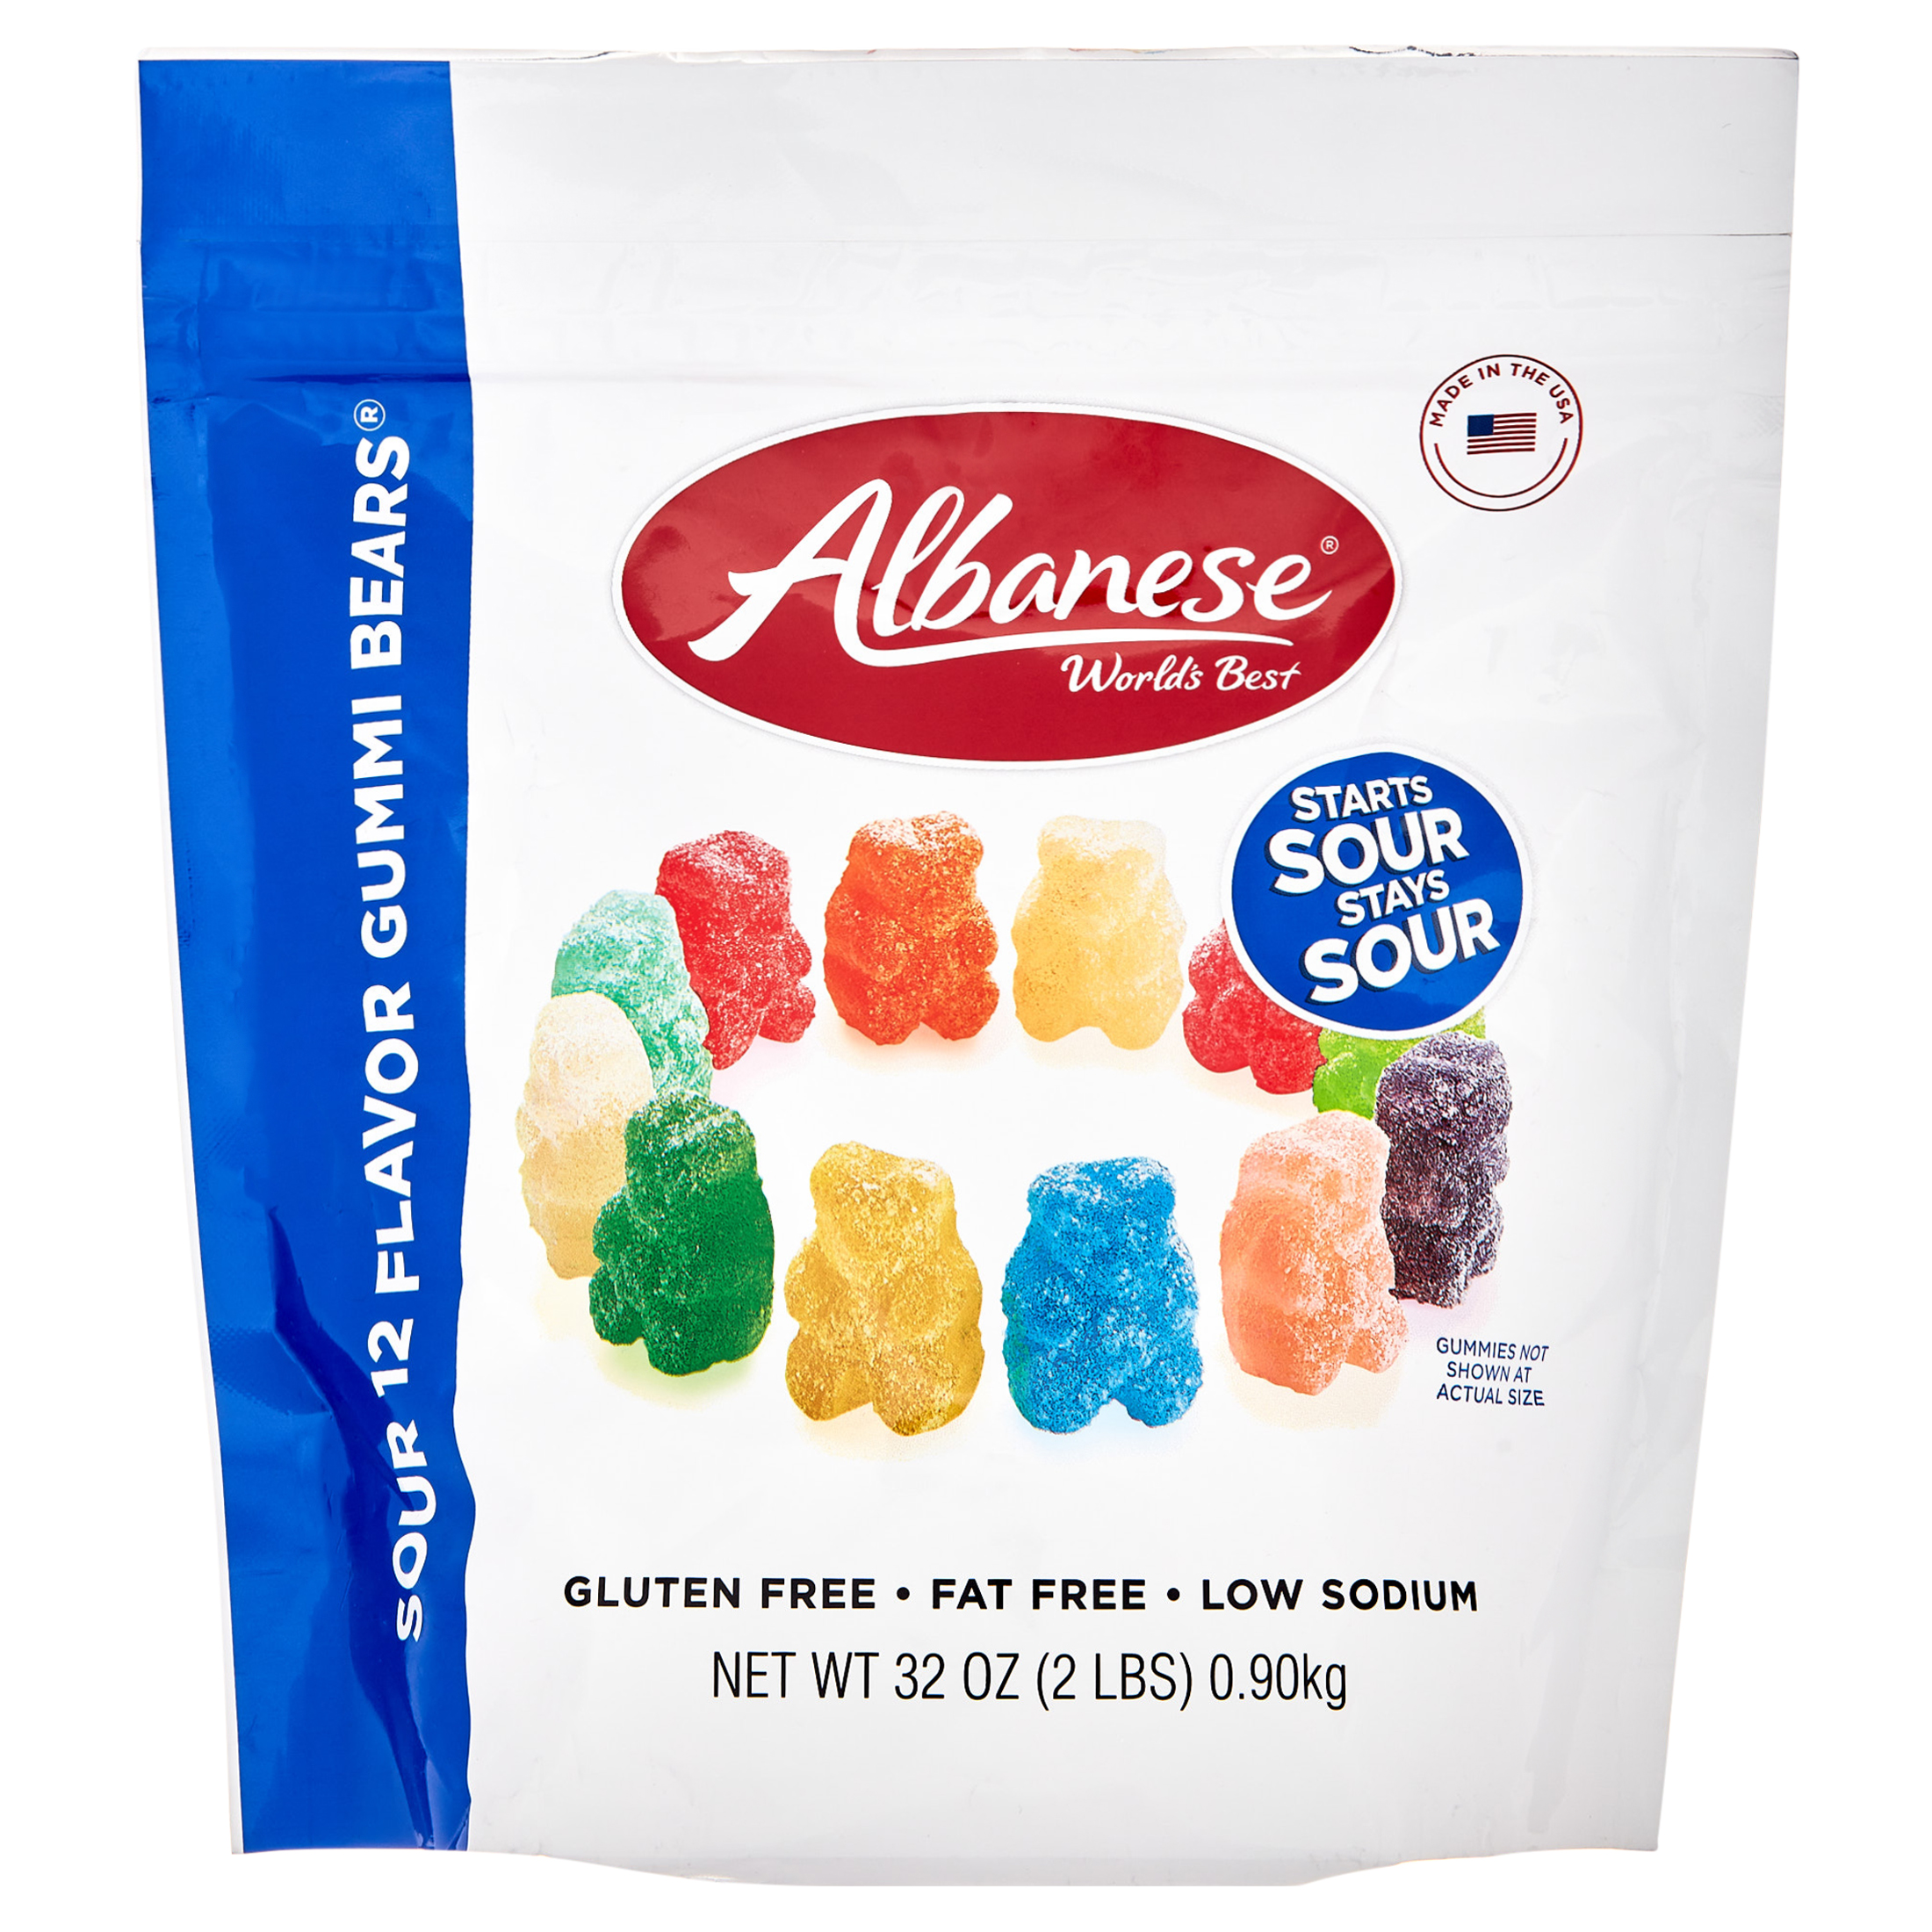 Albanese World's Best Sour 12 Flavor Gummi Bears, Family Size Share 32oz Summer Treats - image 1 of 12